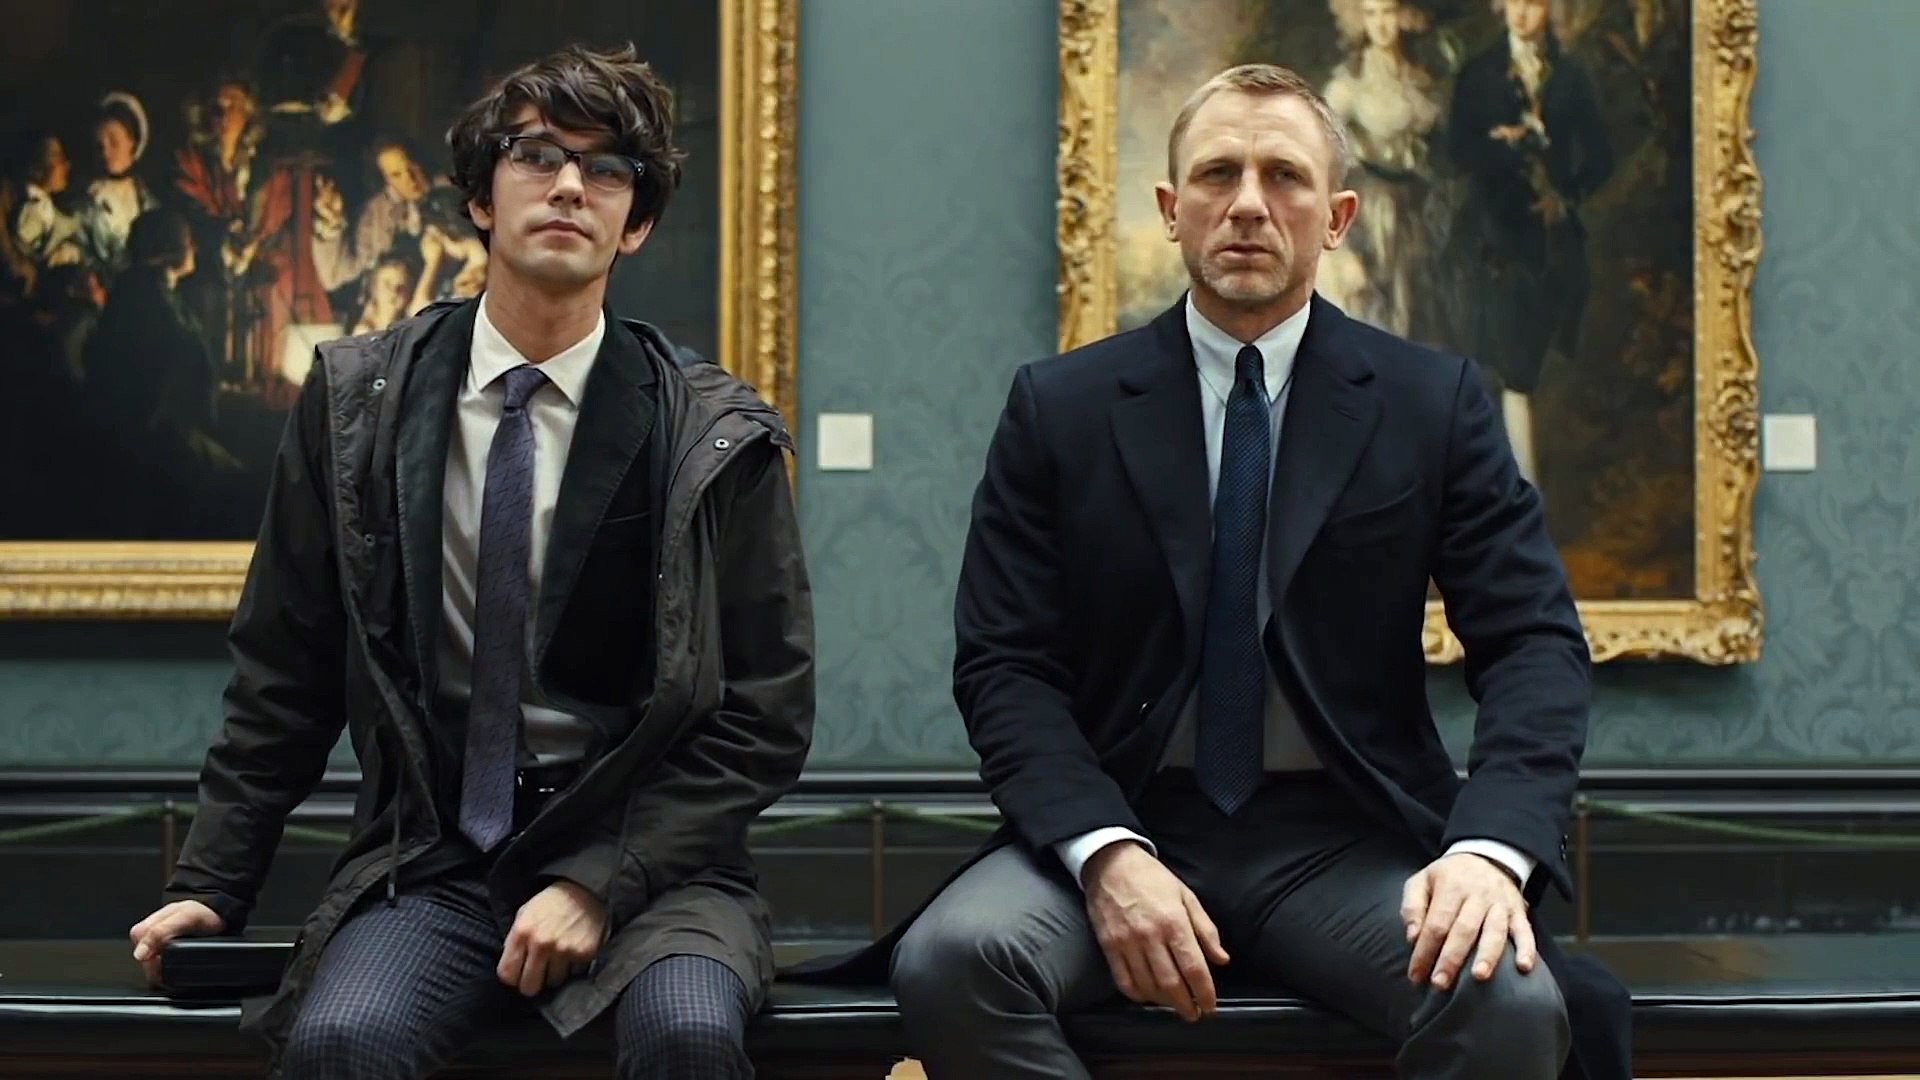 James Bond SKYFALL movie - clip with Daniel Craig and Ben Whishaw - Bond  meets Q - video Dailymotion